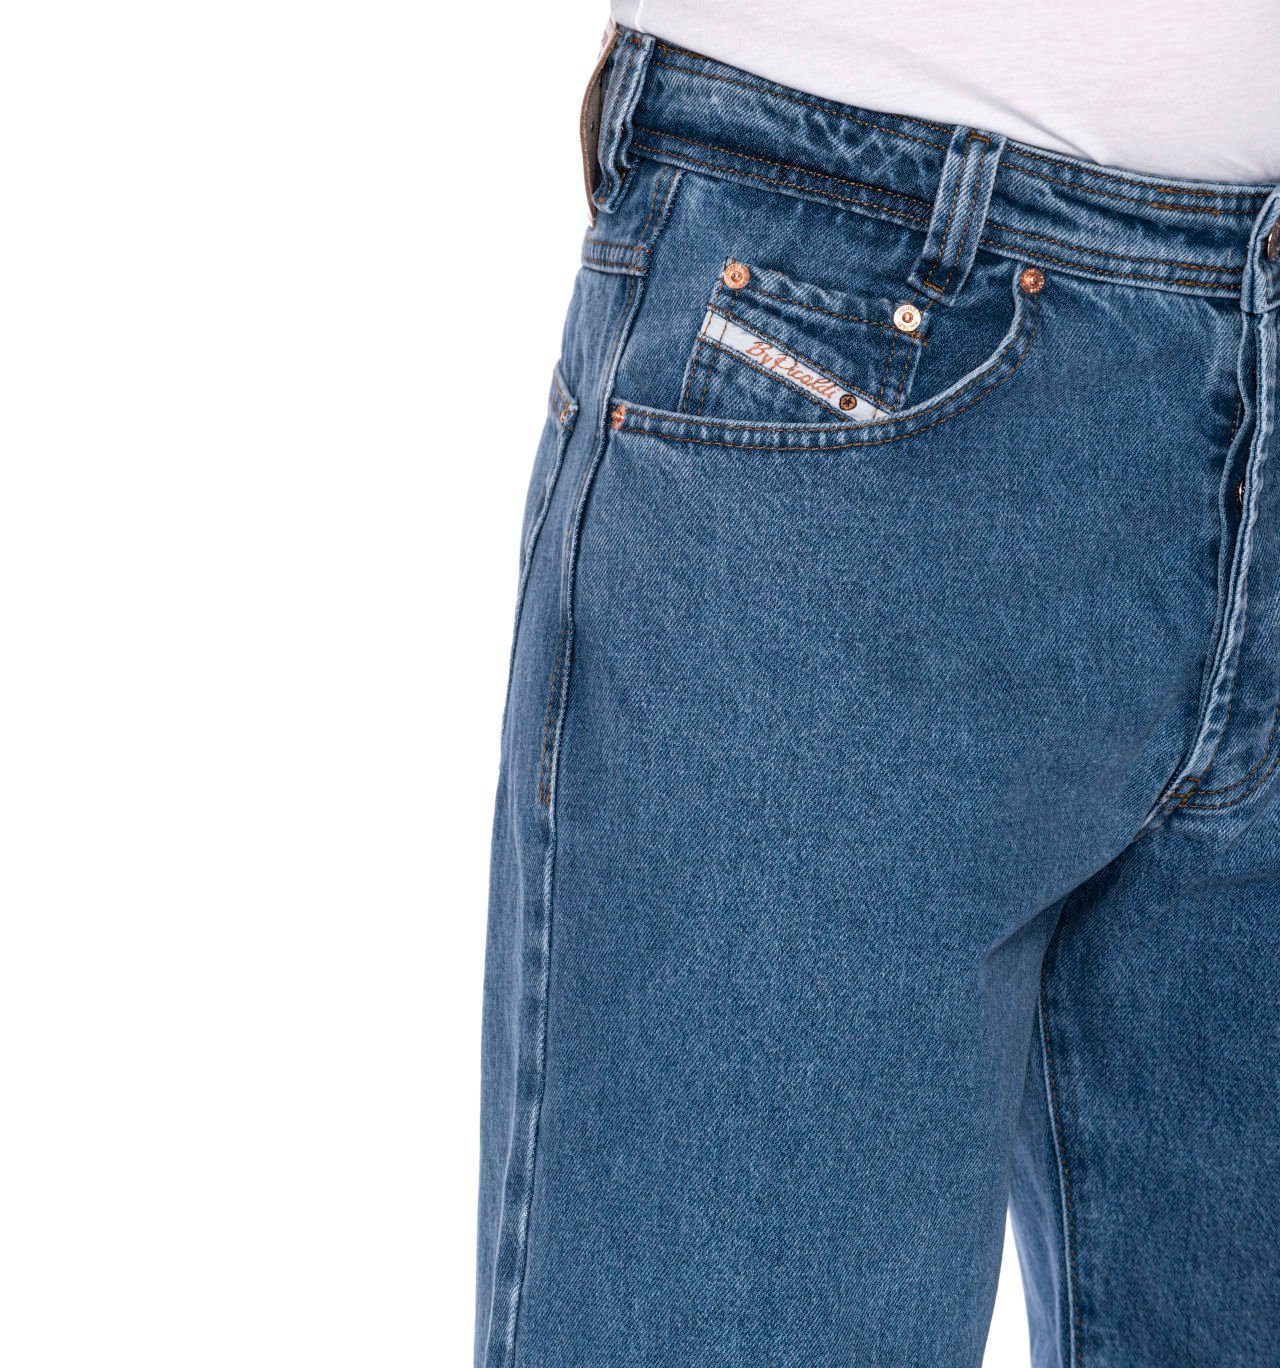 PICALDI Jeans Jeans Loose Jeans Pocket Detroit Five Zicco 471 Weite Fit